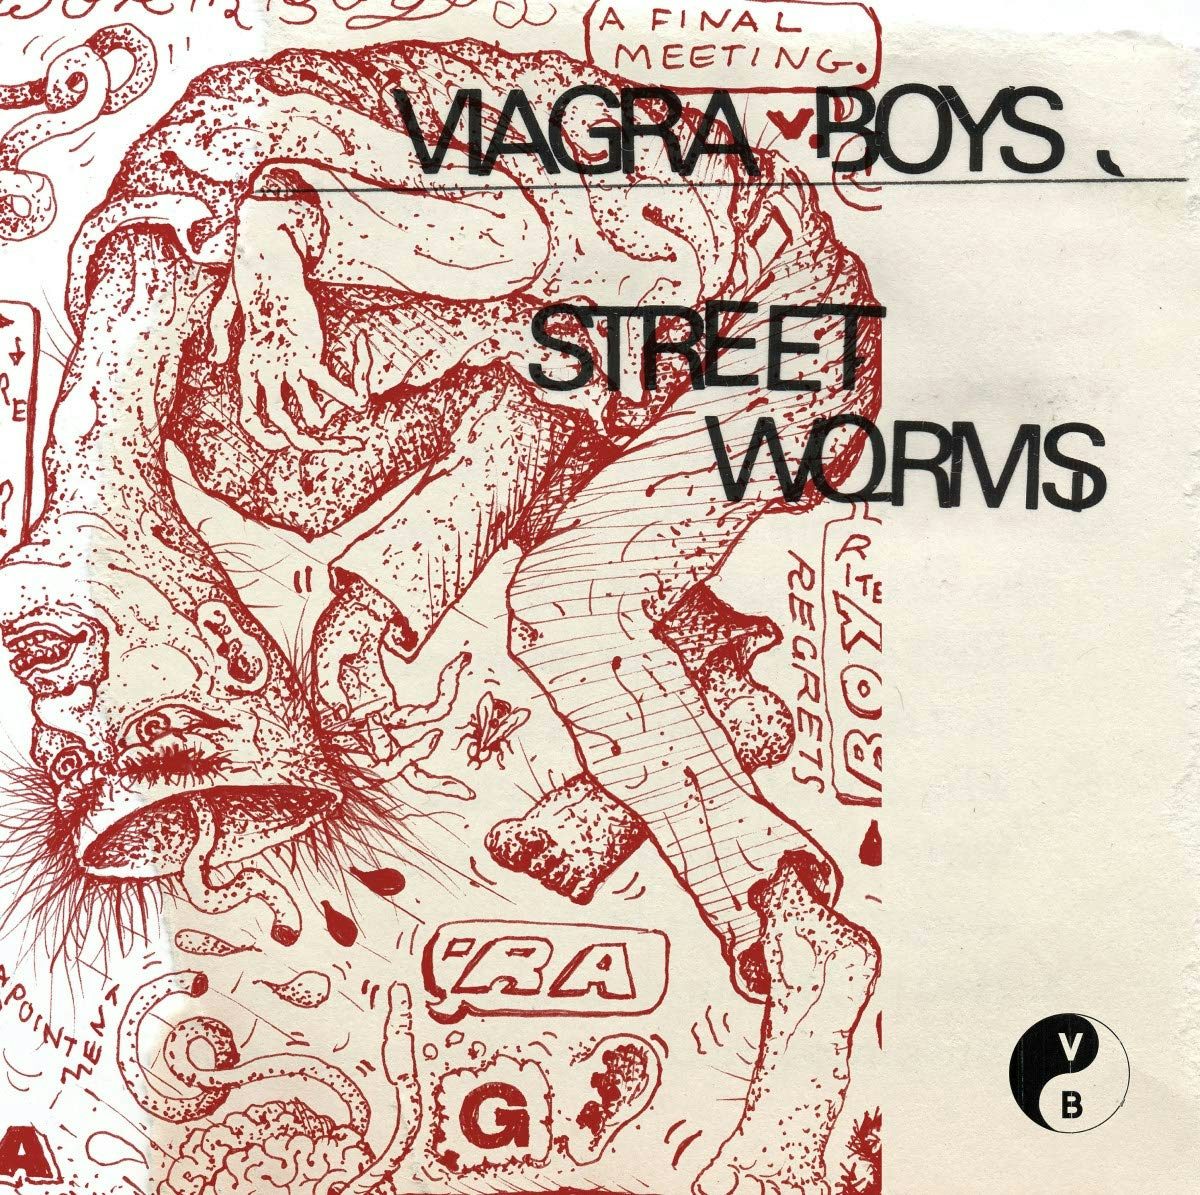 Viagra Boys Street Worms Vinyl Record